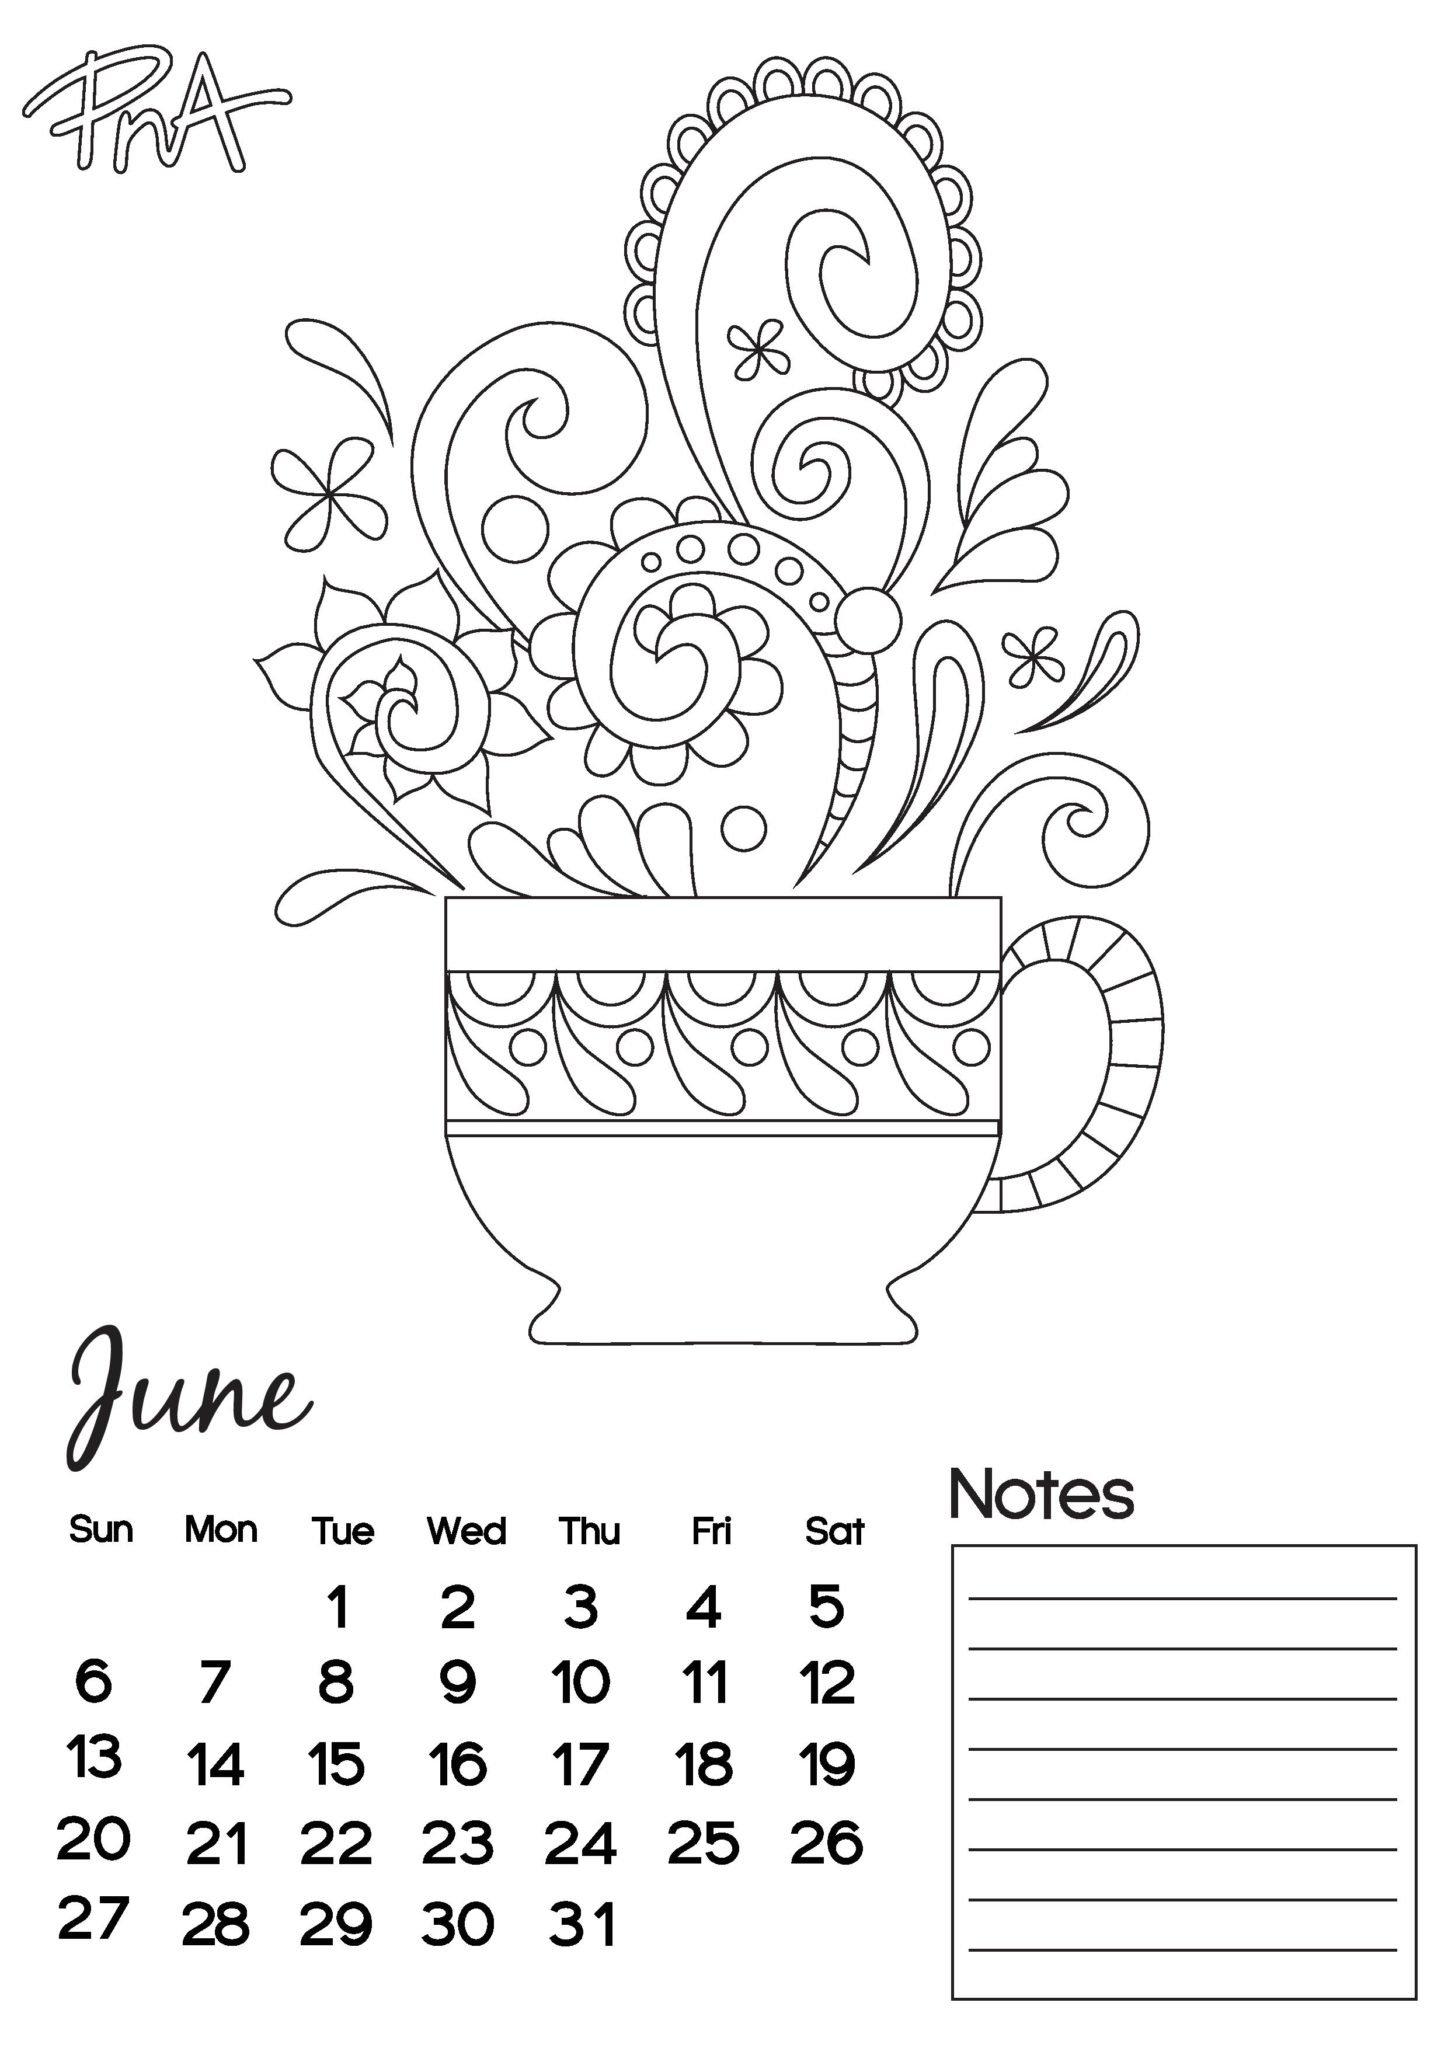 June Free Colouring Calendar PNA Colour Your World